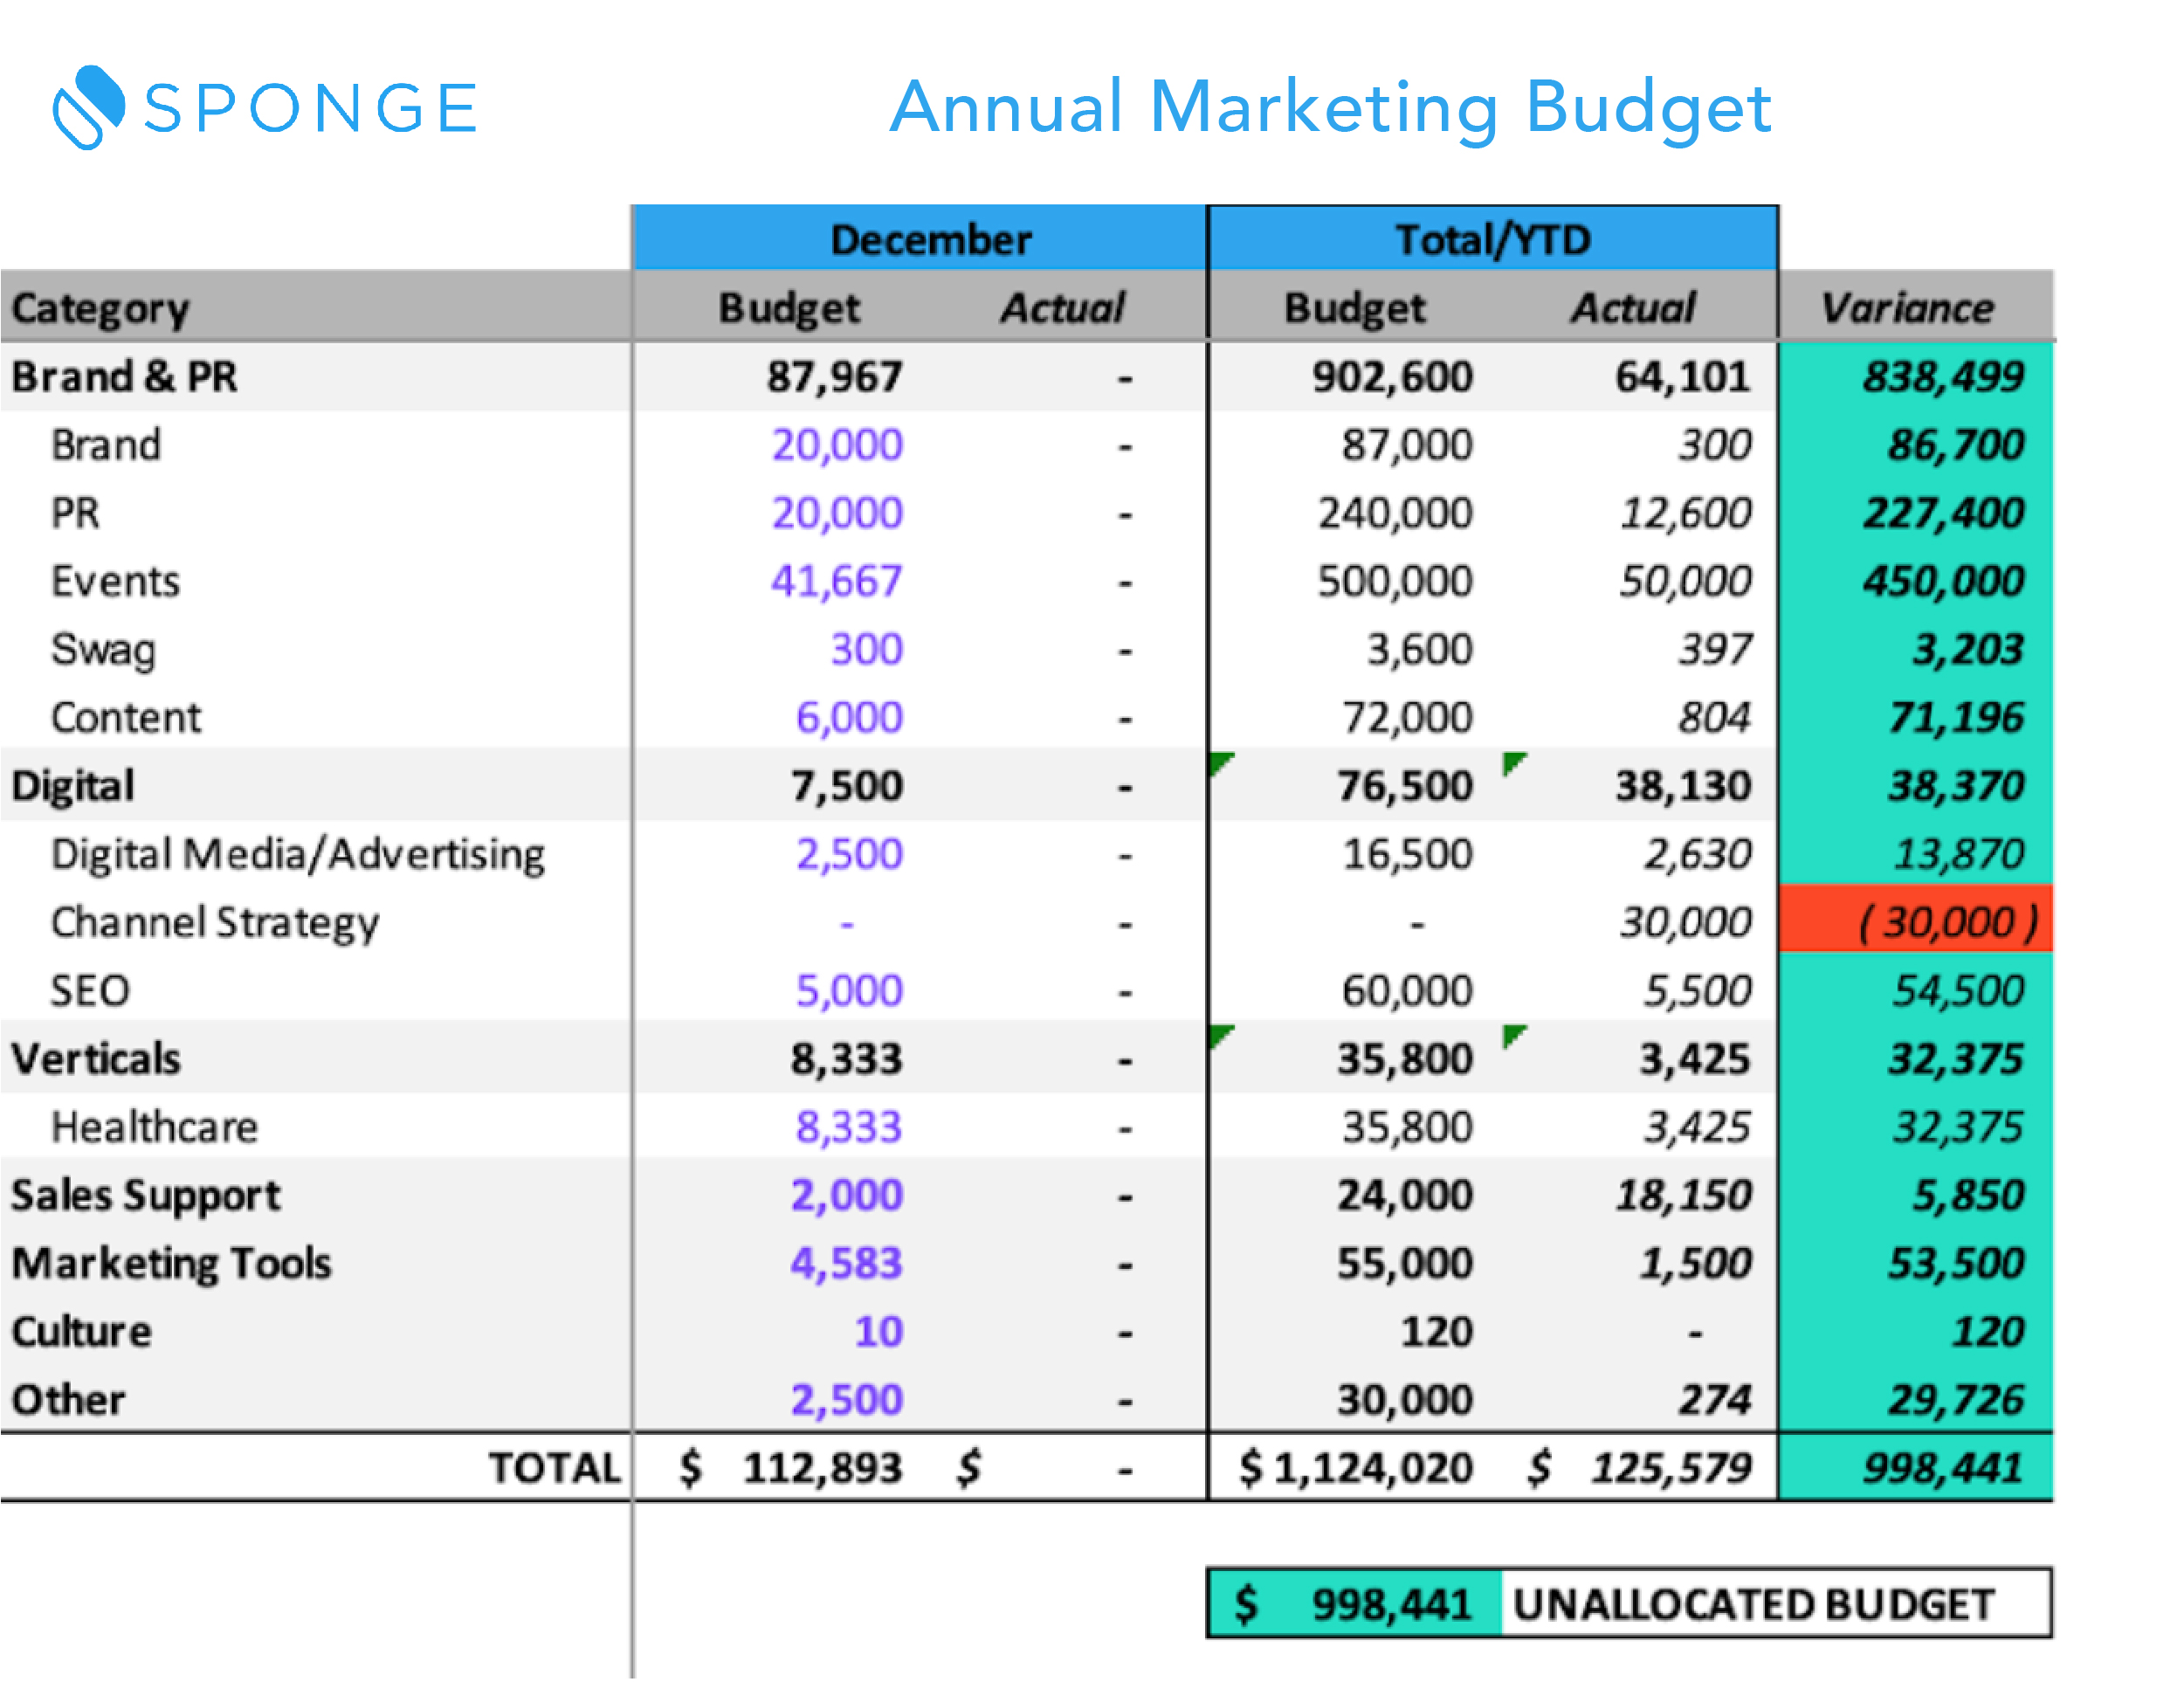 Annual Marketing Budget